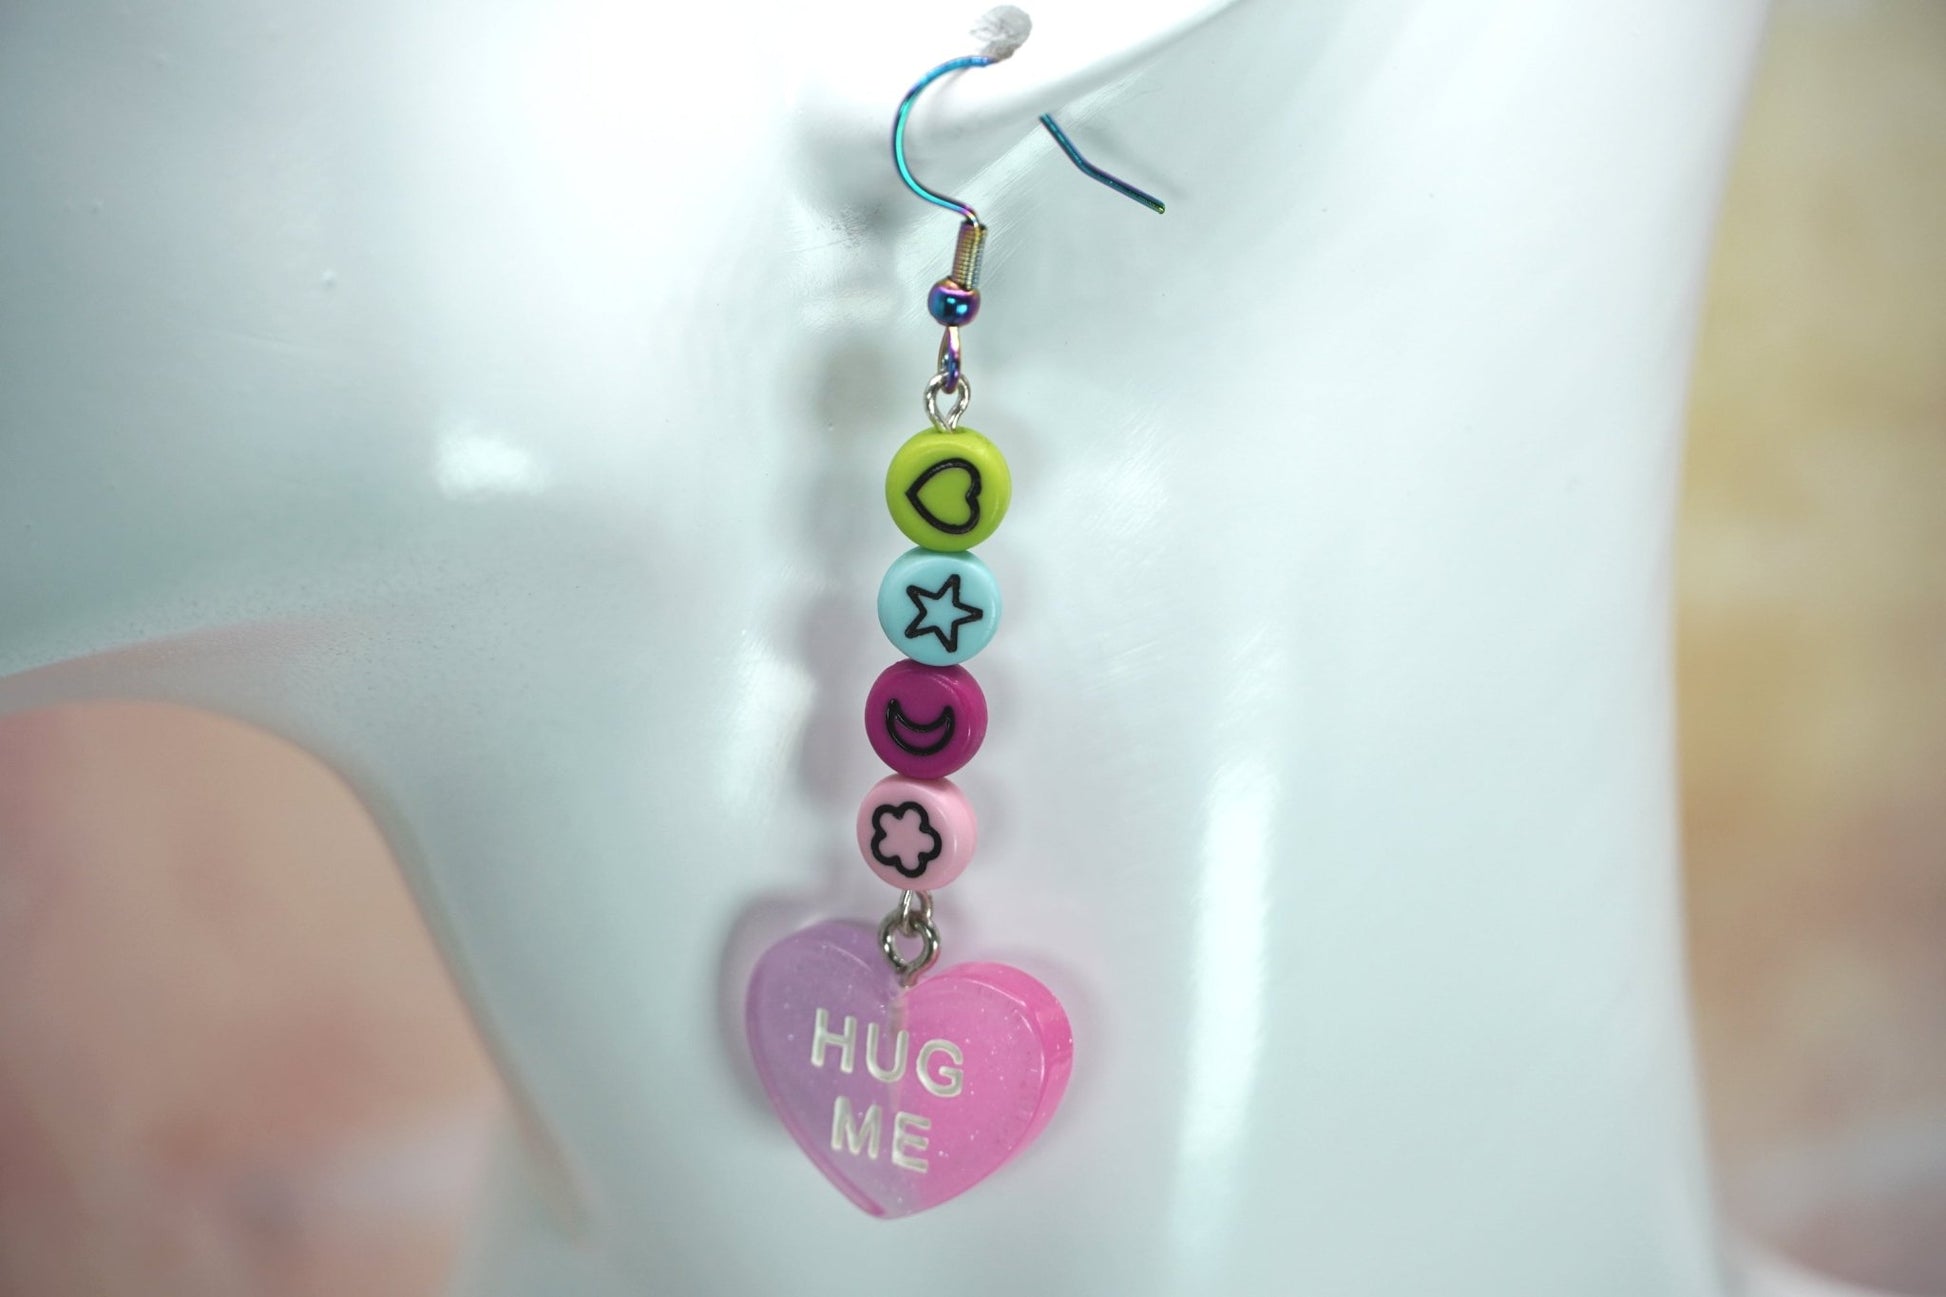 Hug Me Heart Earrings and Mystery Blind Bag Pair of Earrings - Dekowaii Jewelry Company